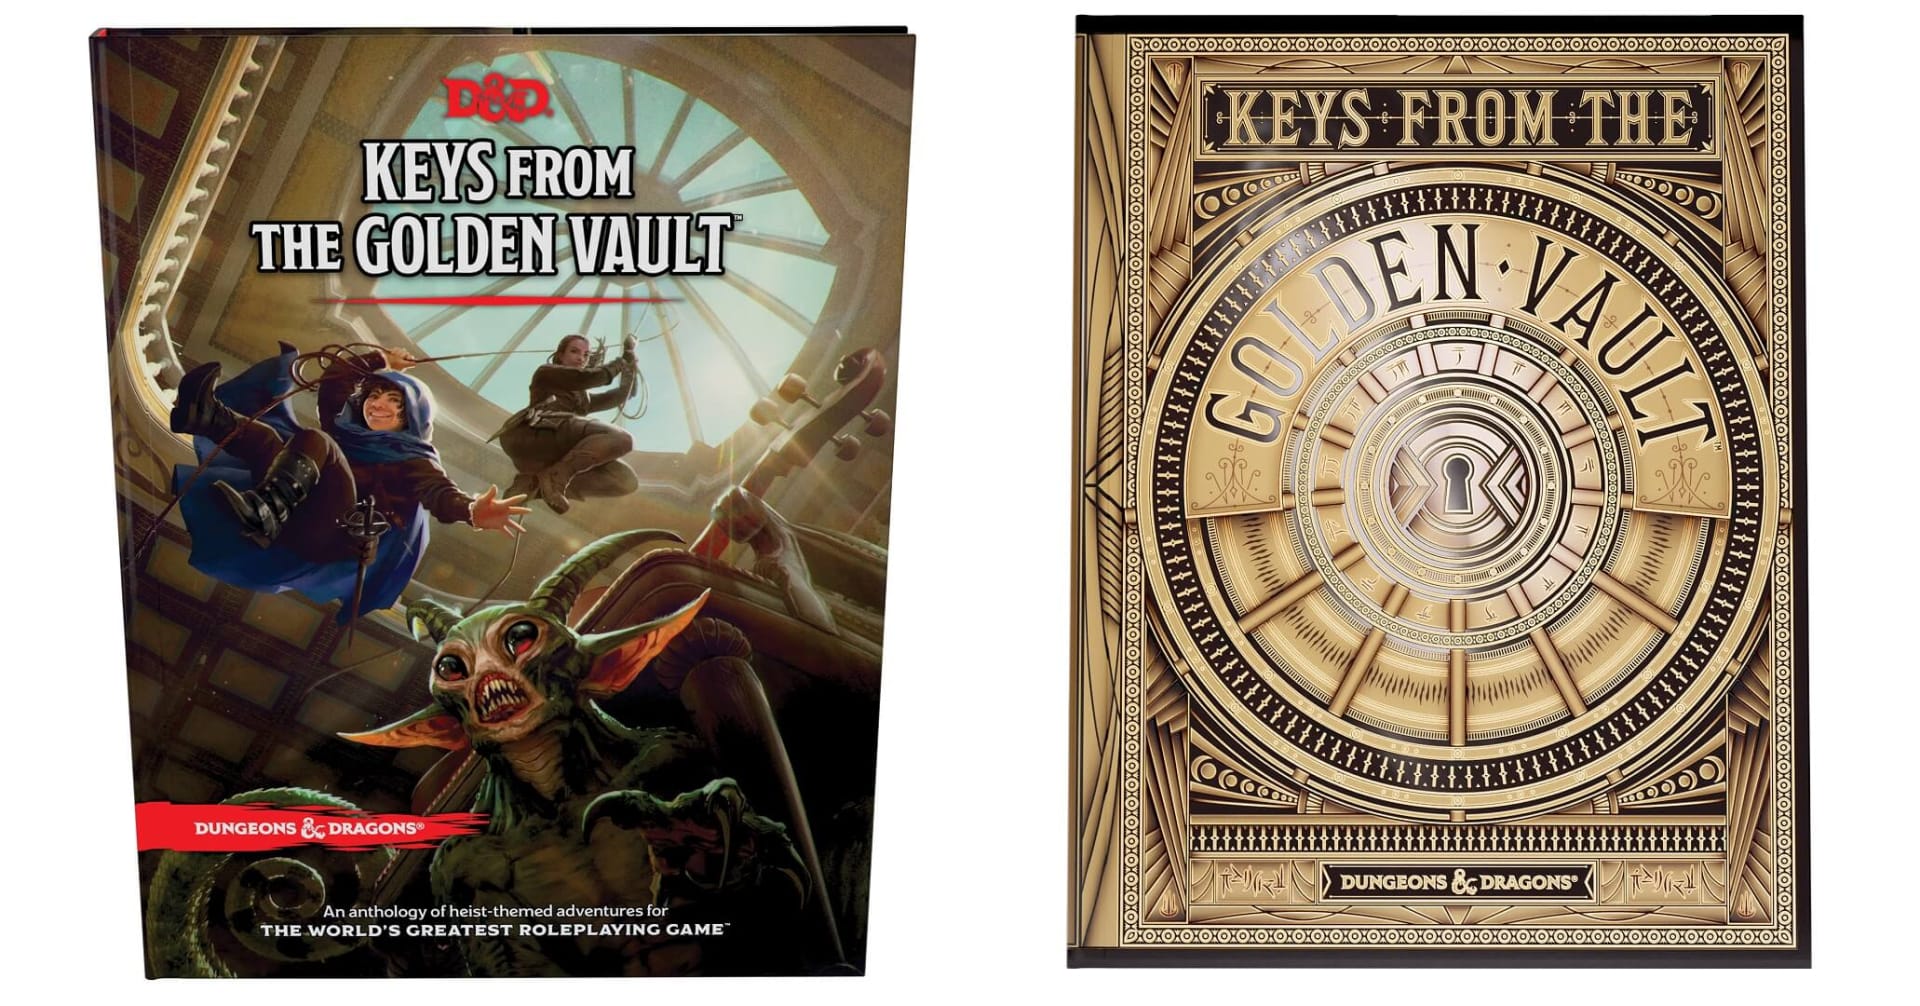 The standard and alternate cover art for Keys from the Golden Vault